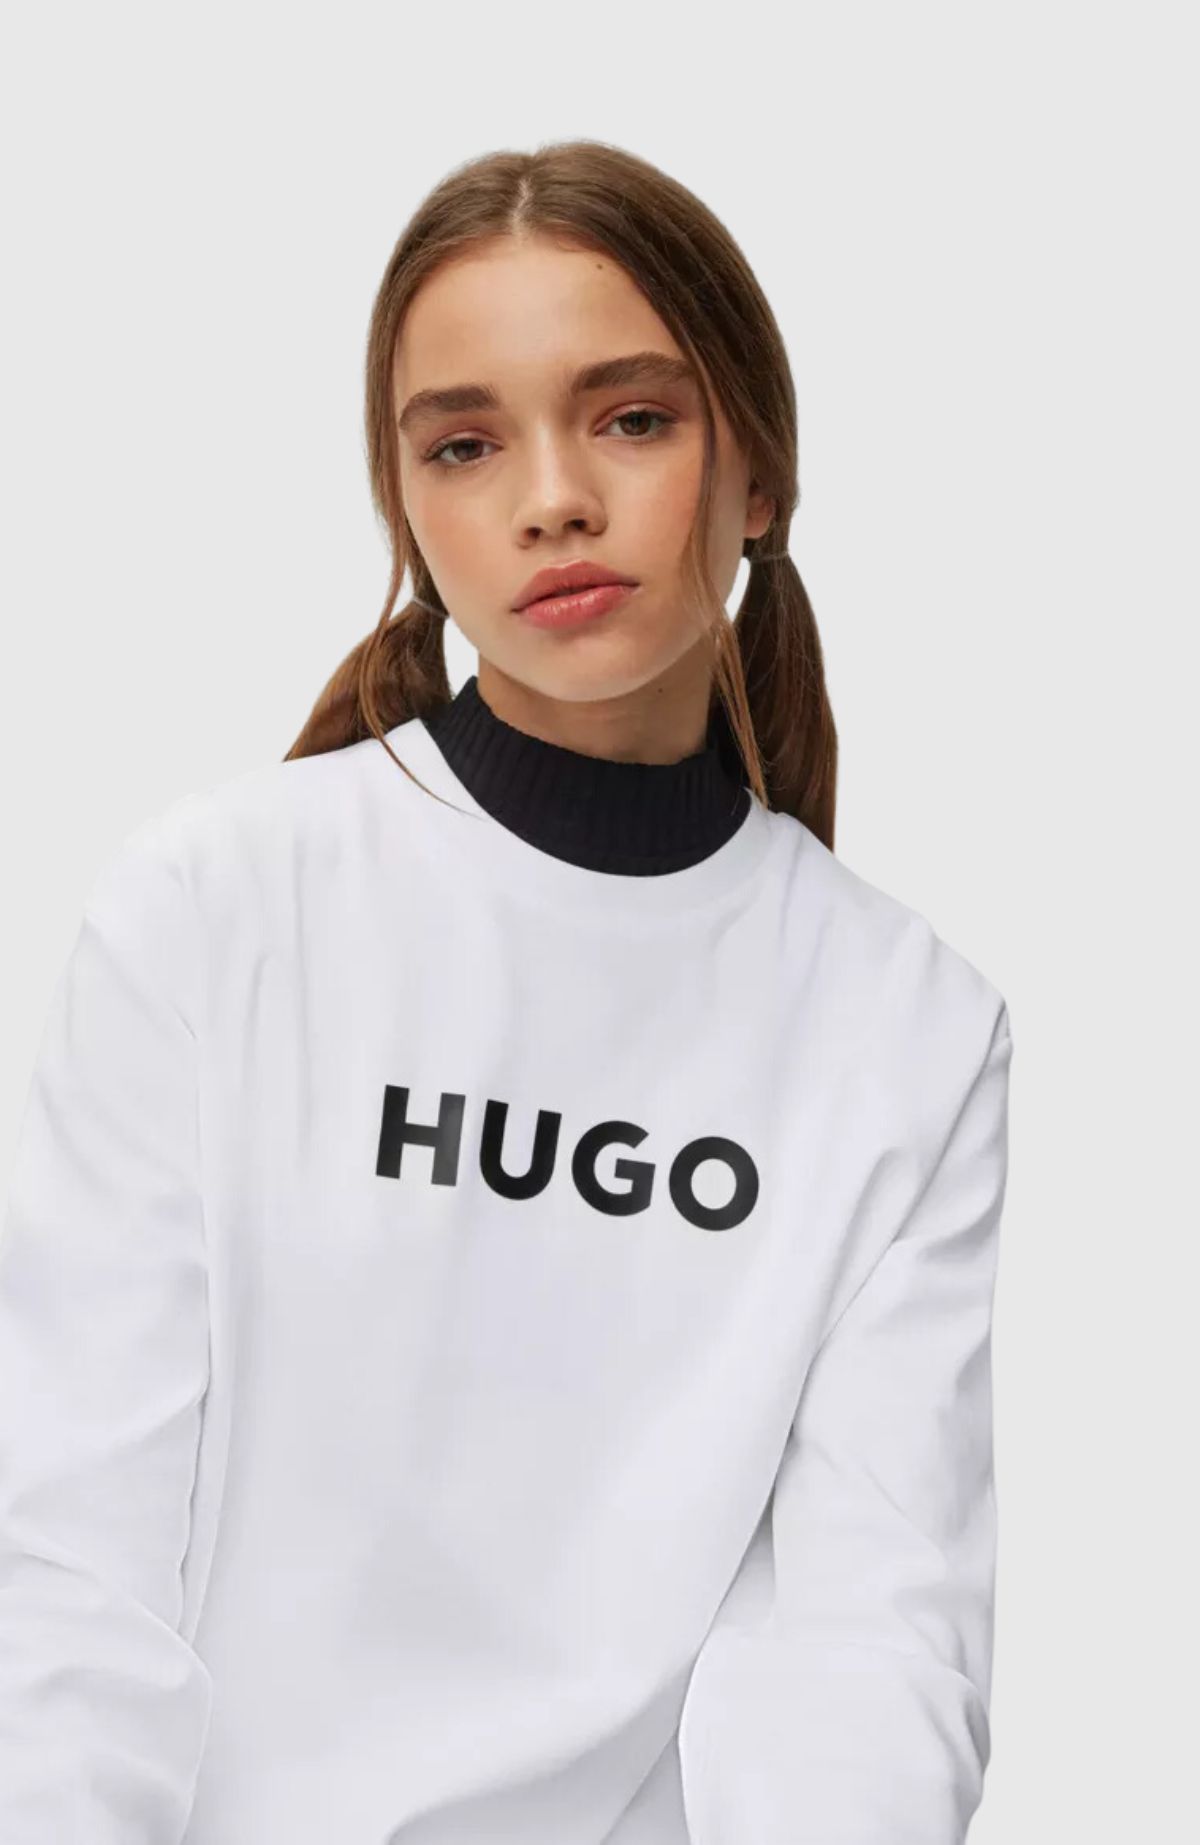 The HUGO Sweater